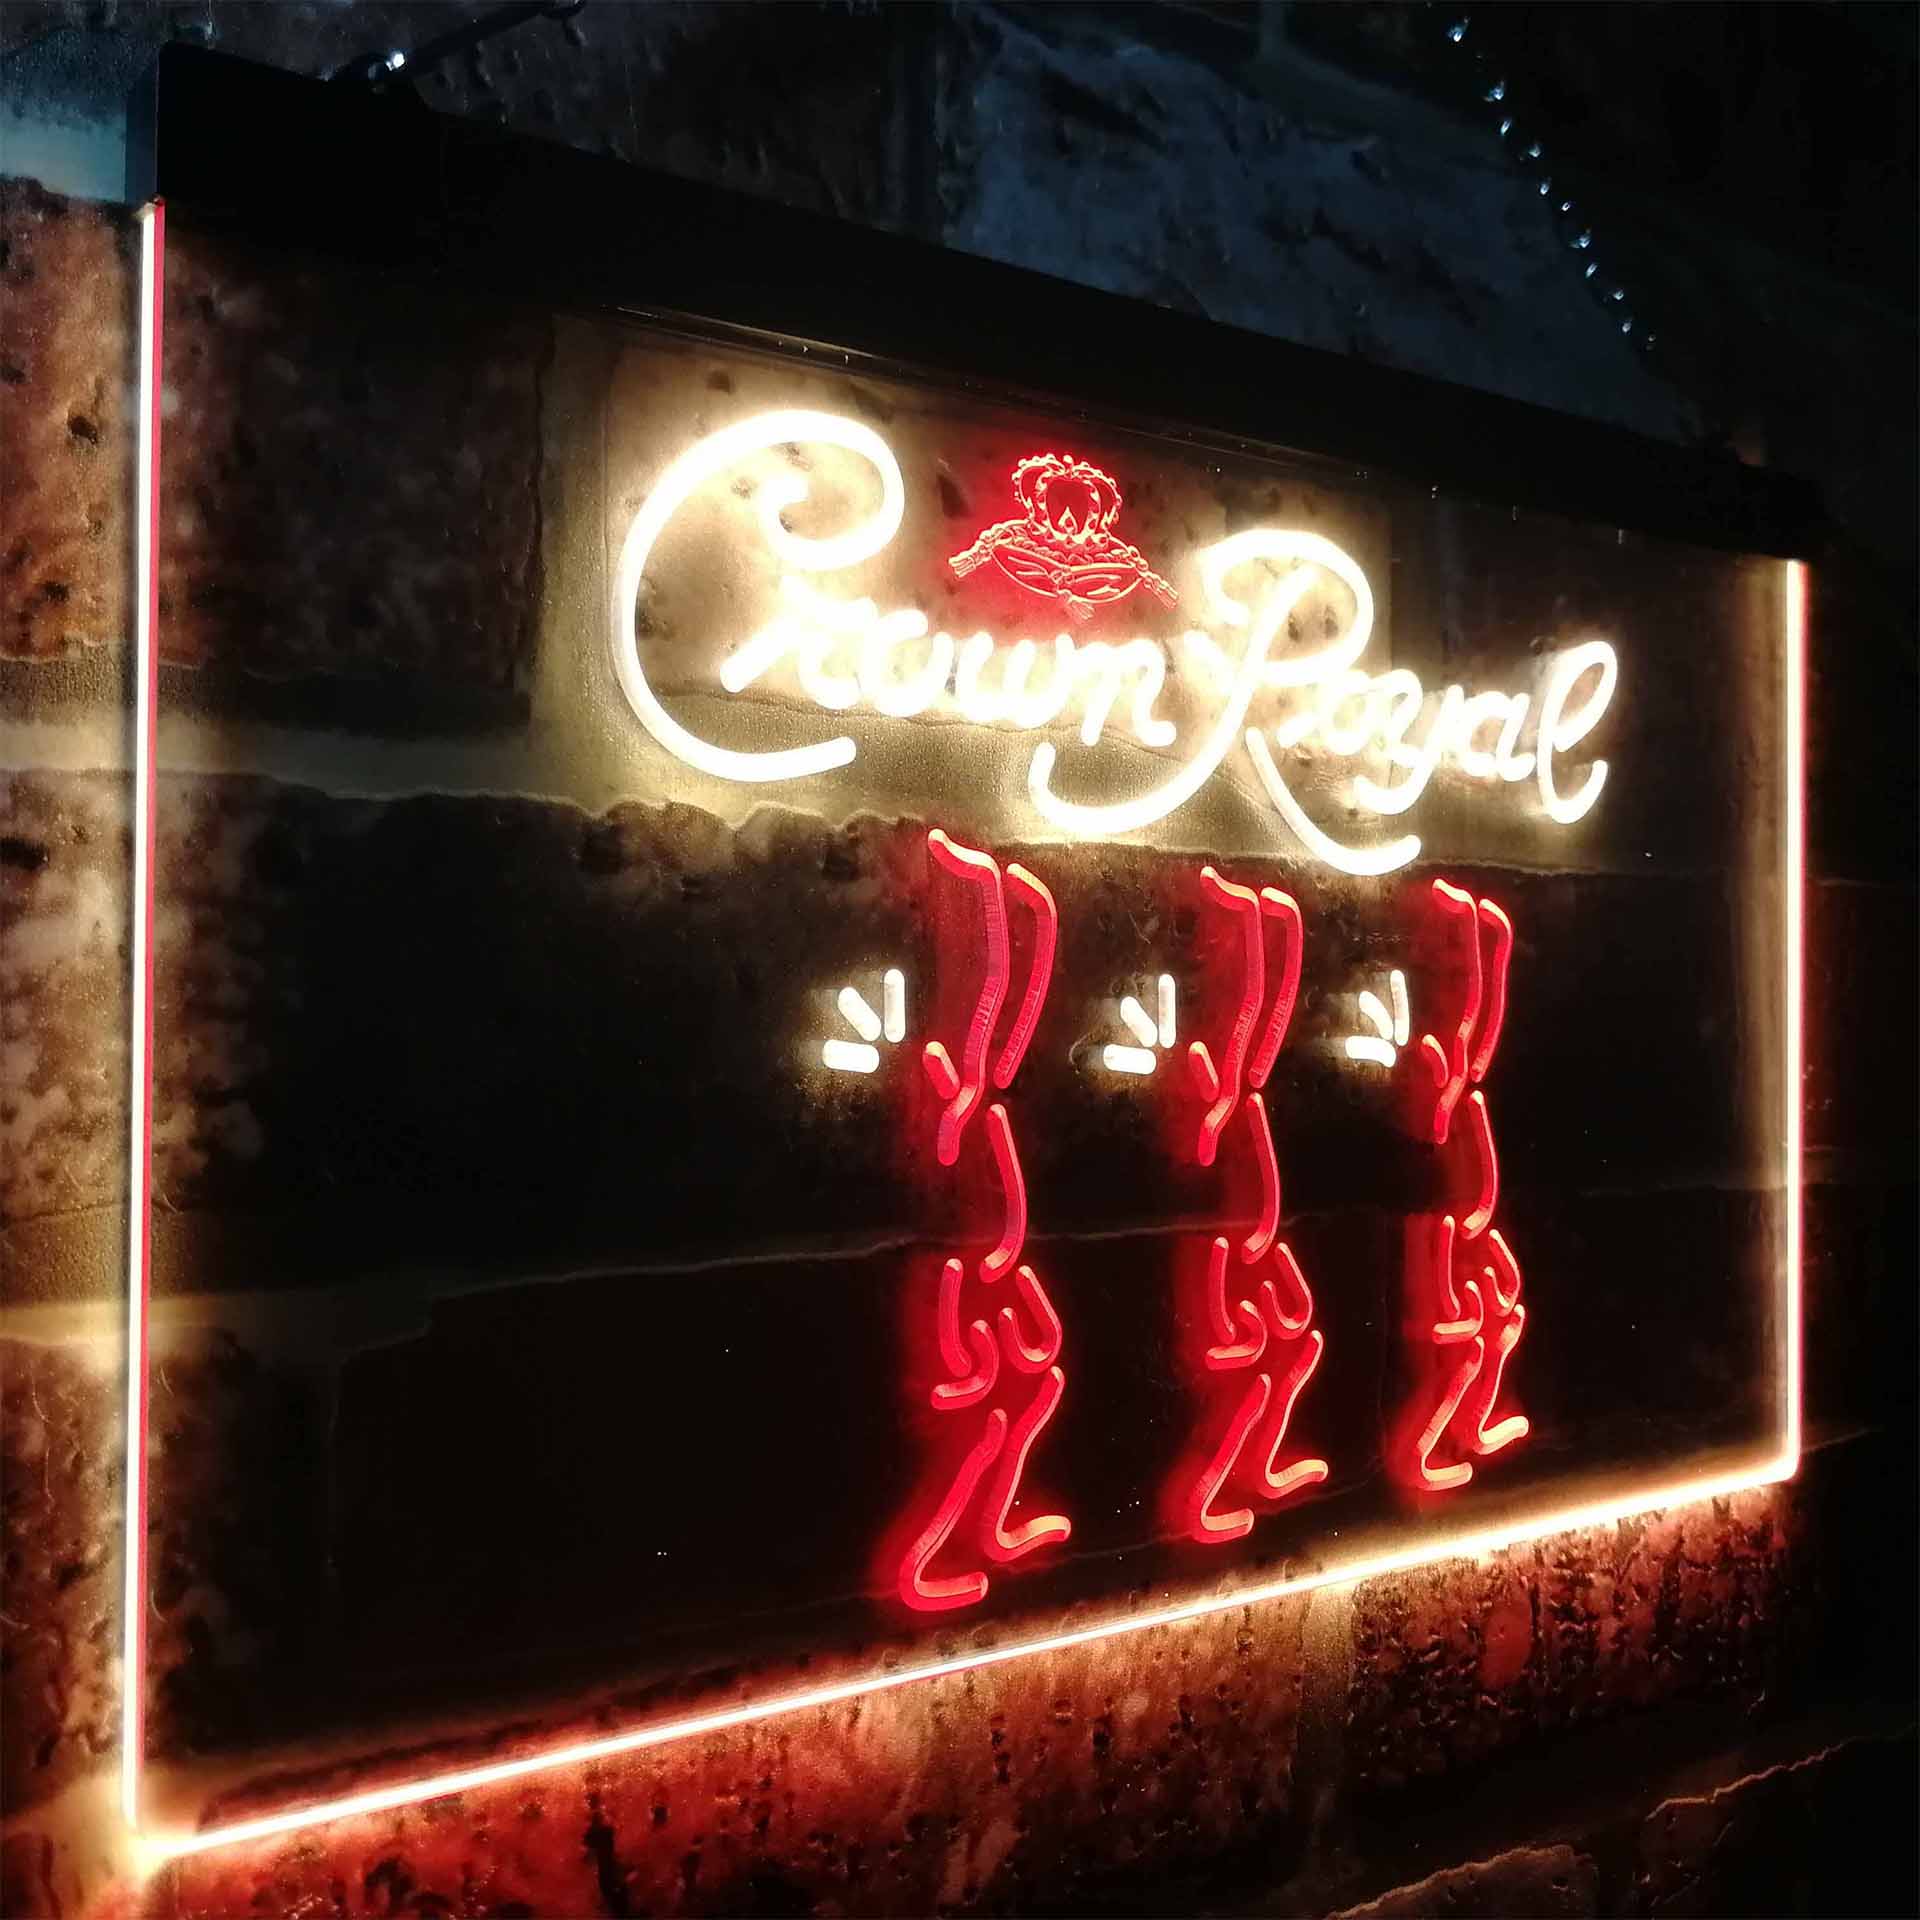 Crown Royal Beer Gift Neon-Like LED Sign